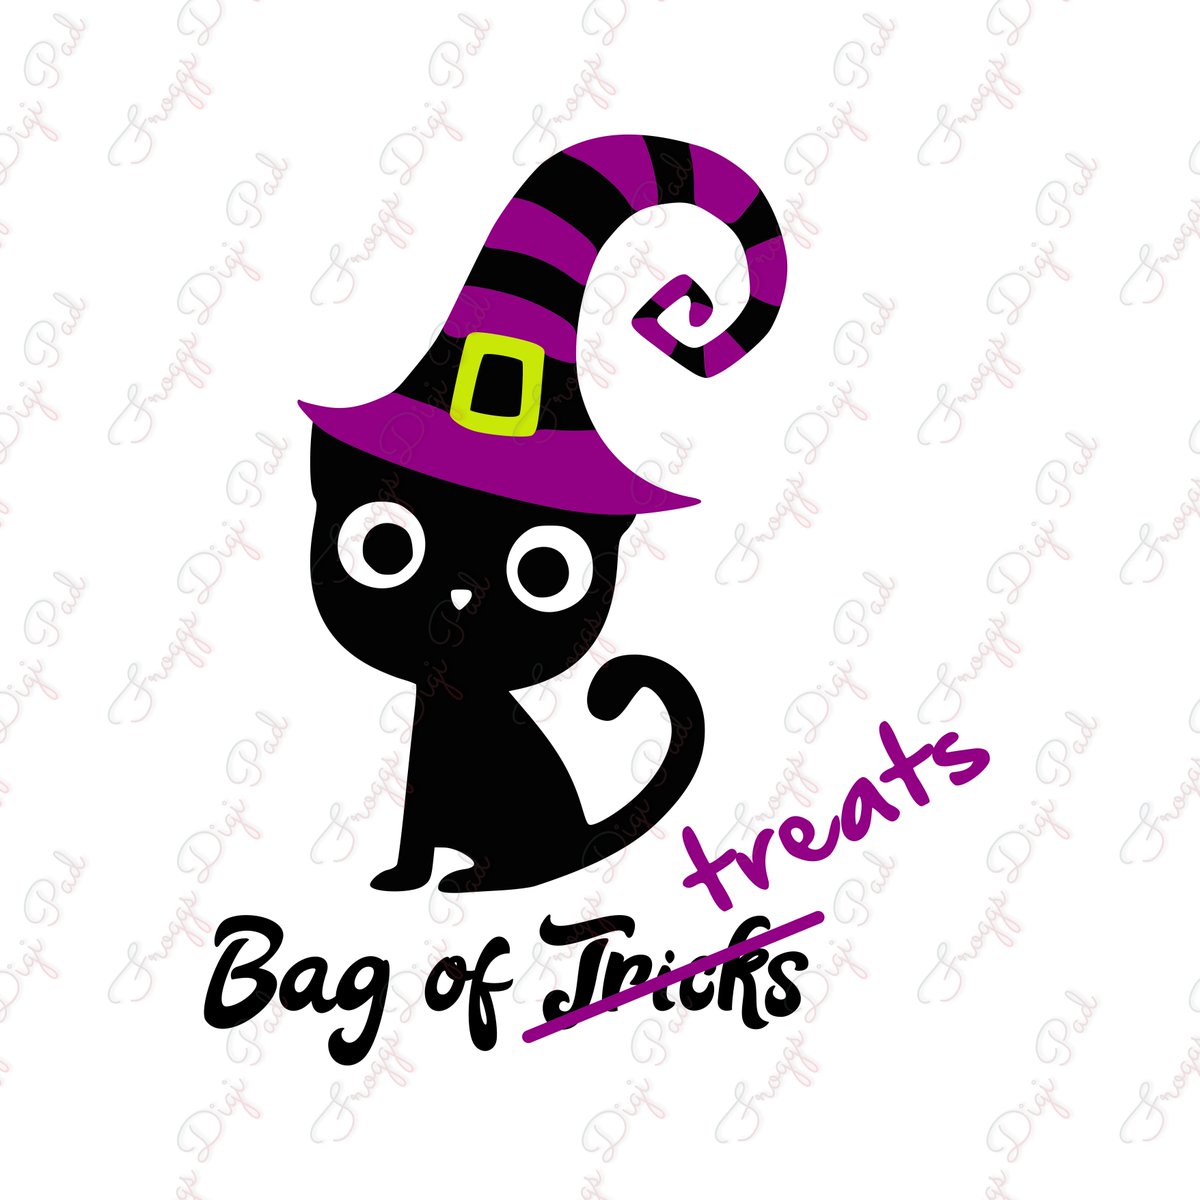 Bag of Tricks or Treats | Halloween | Fall | SVG PNG PDF | Cri by FroggsDigiPad etsy.me/3sWTAJc via @Etsy 

#etsyshop #etsyshop #svgfiles #png #pngfile #fall #falldecor #halloween #svg #etsyseller #trickortreat #digitalart #etsycommunity #smallbuisness #fall #etsyproducts